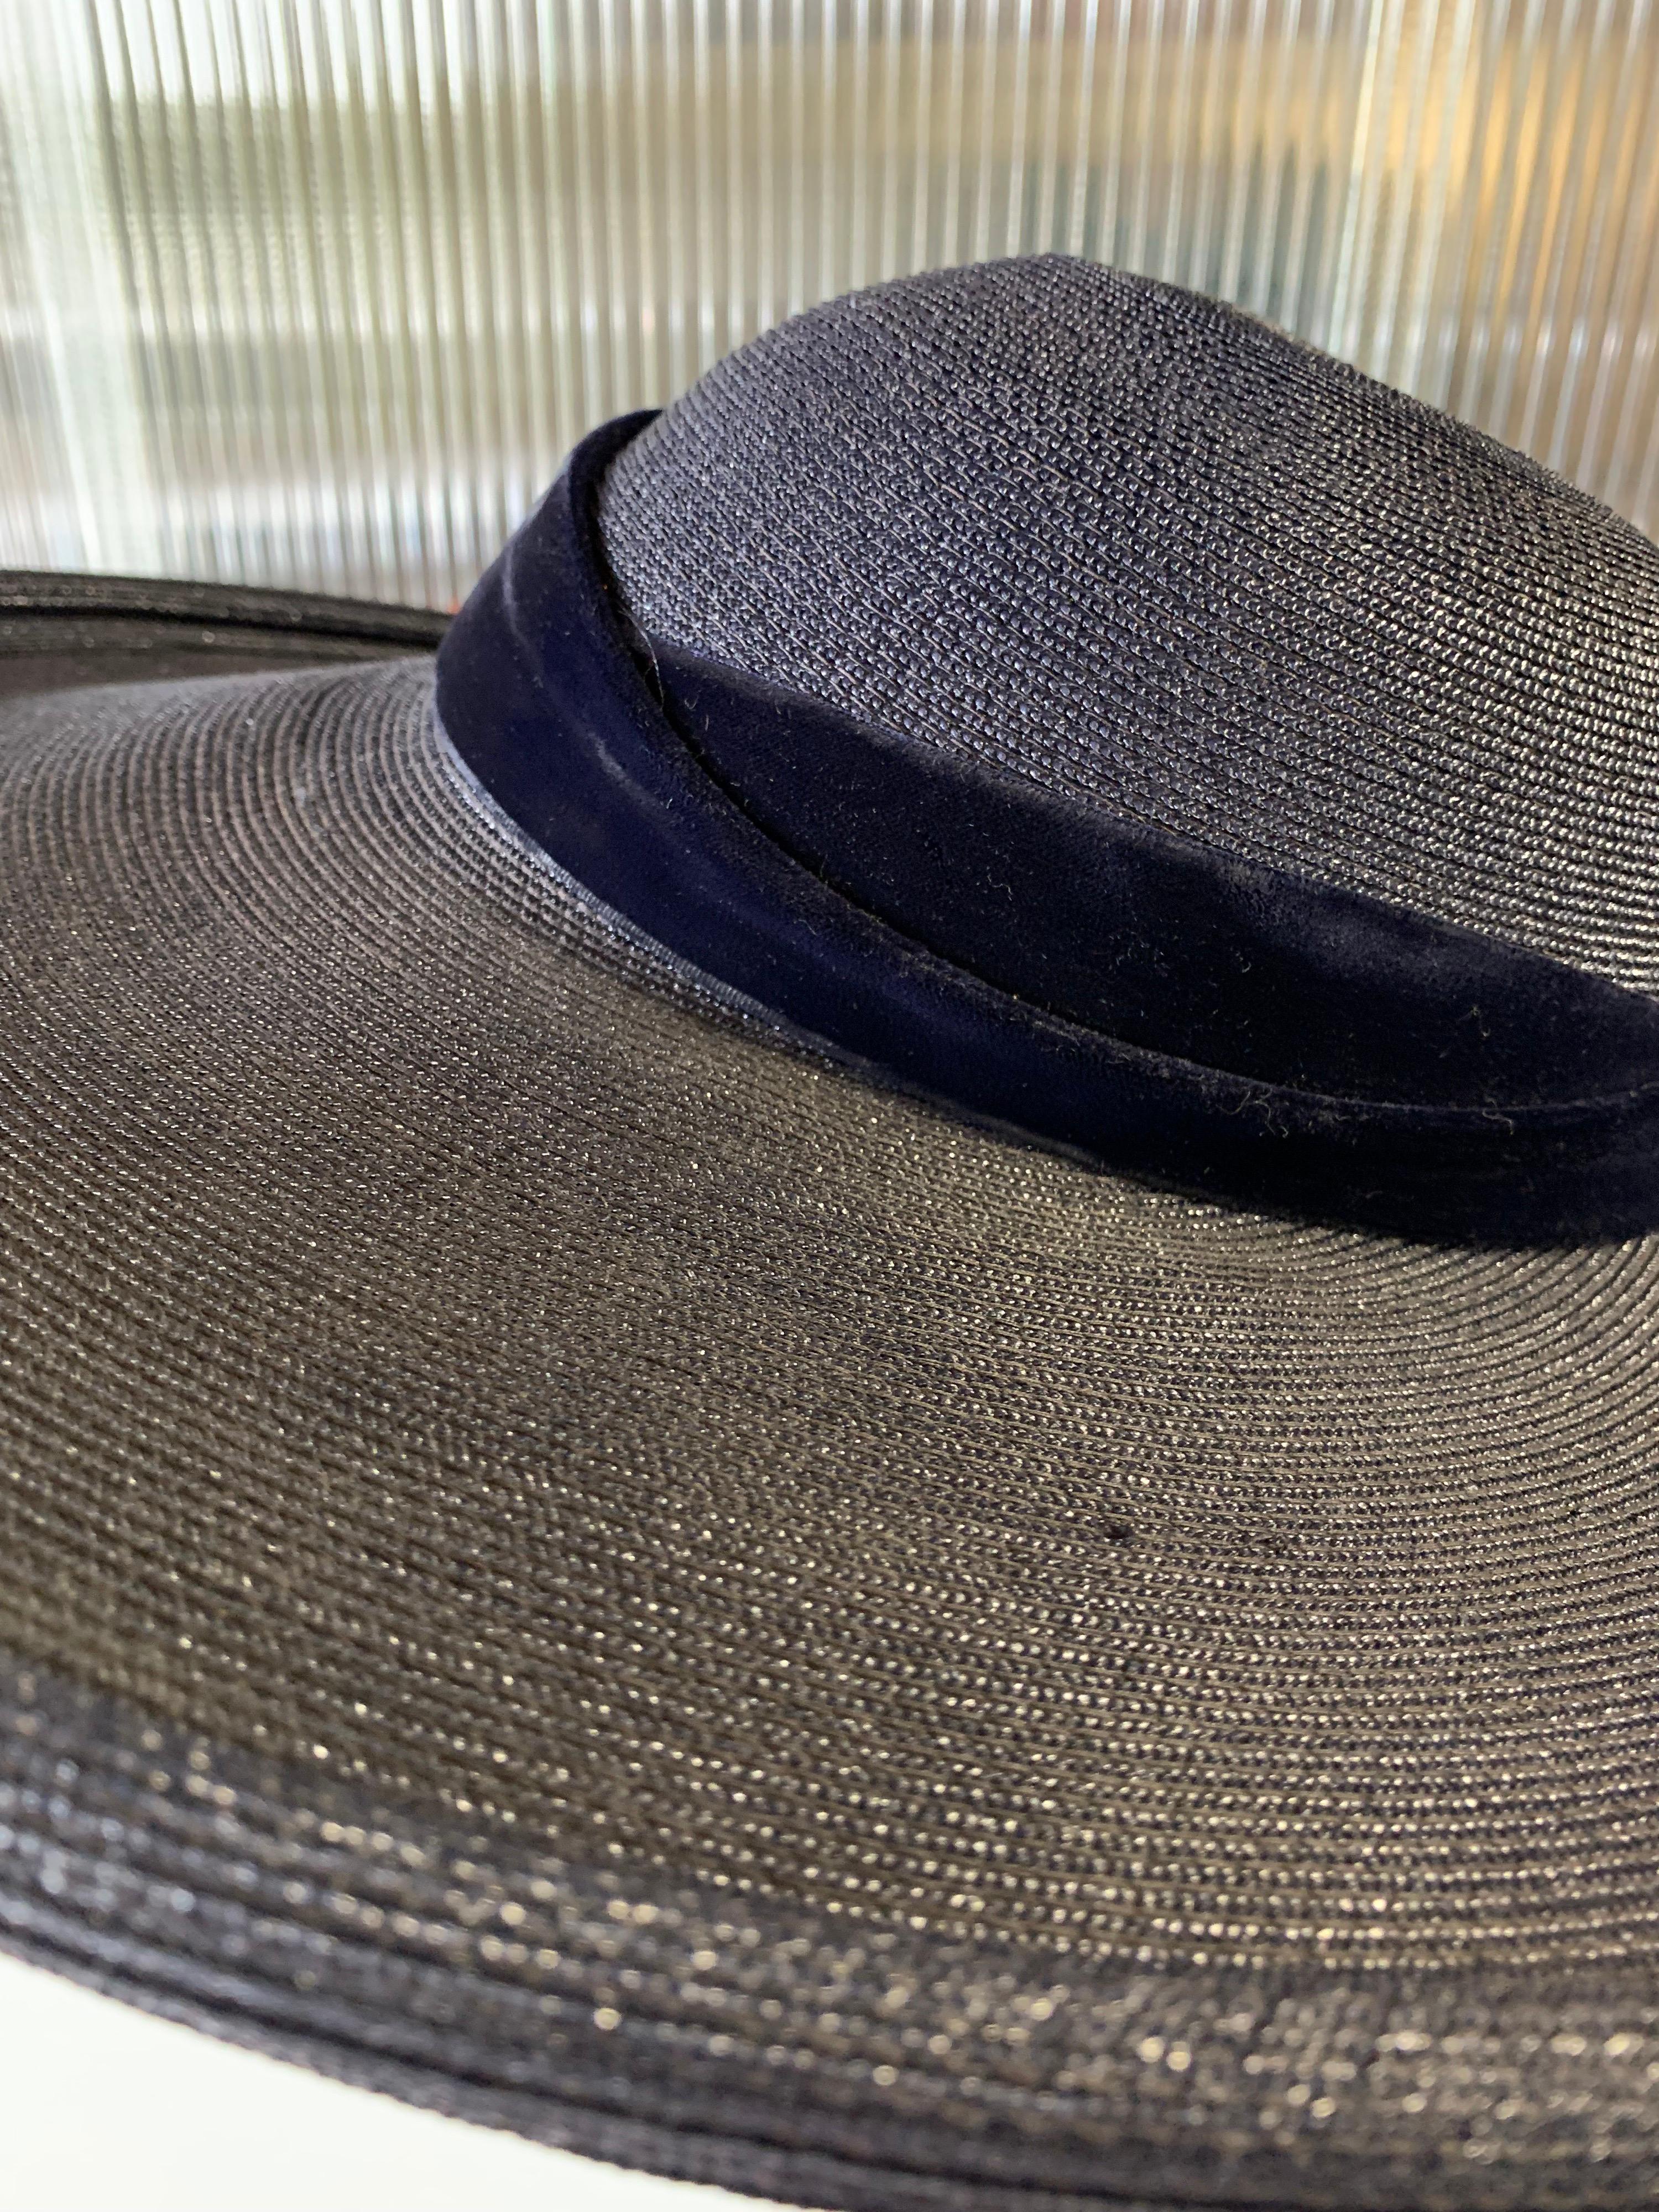 1950s Patrice Model Navy Blue Straw Cartwheel Hat W/ Double-Layered Brim  2